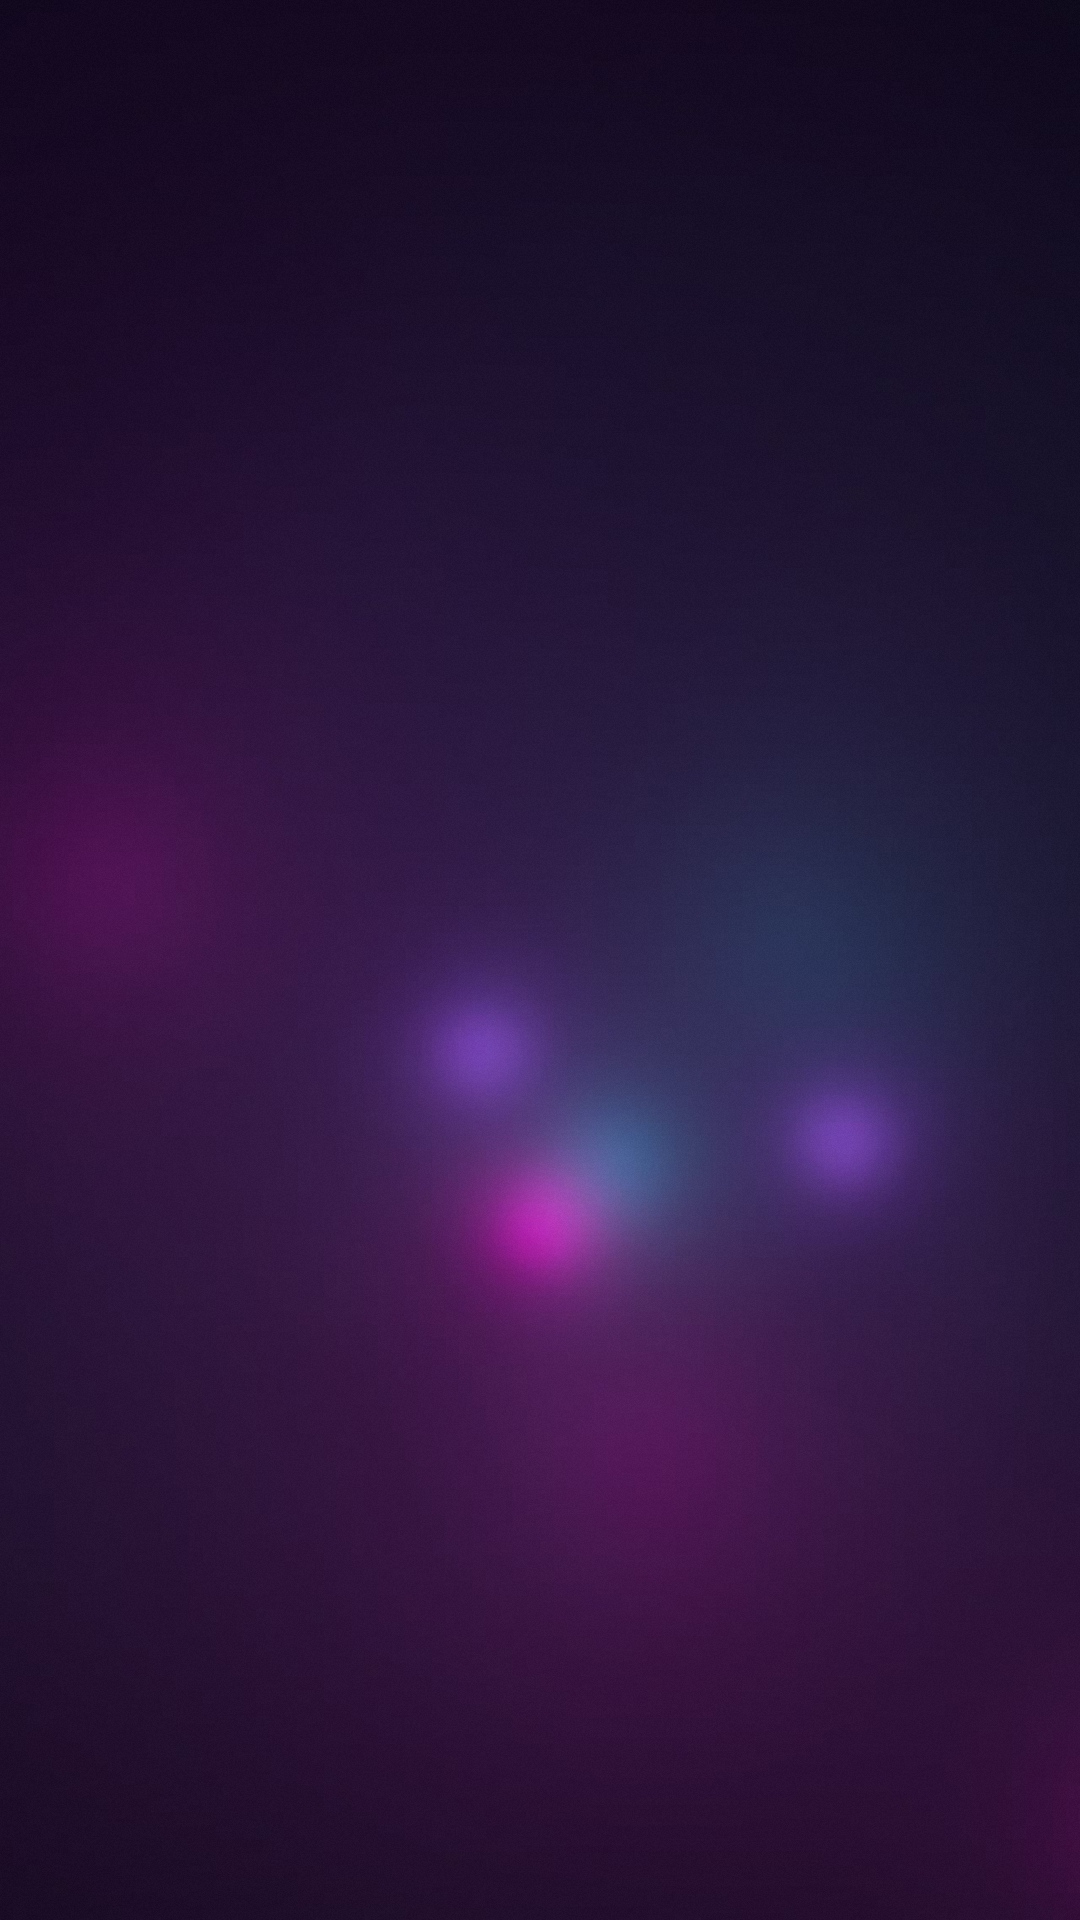 Blurry Lights Abstract Nokia Lumia Wallpaper HD